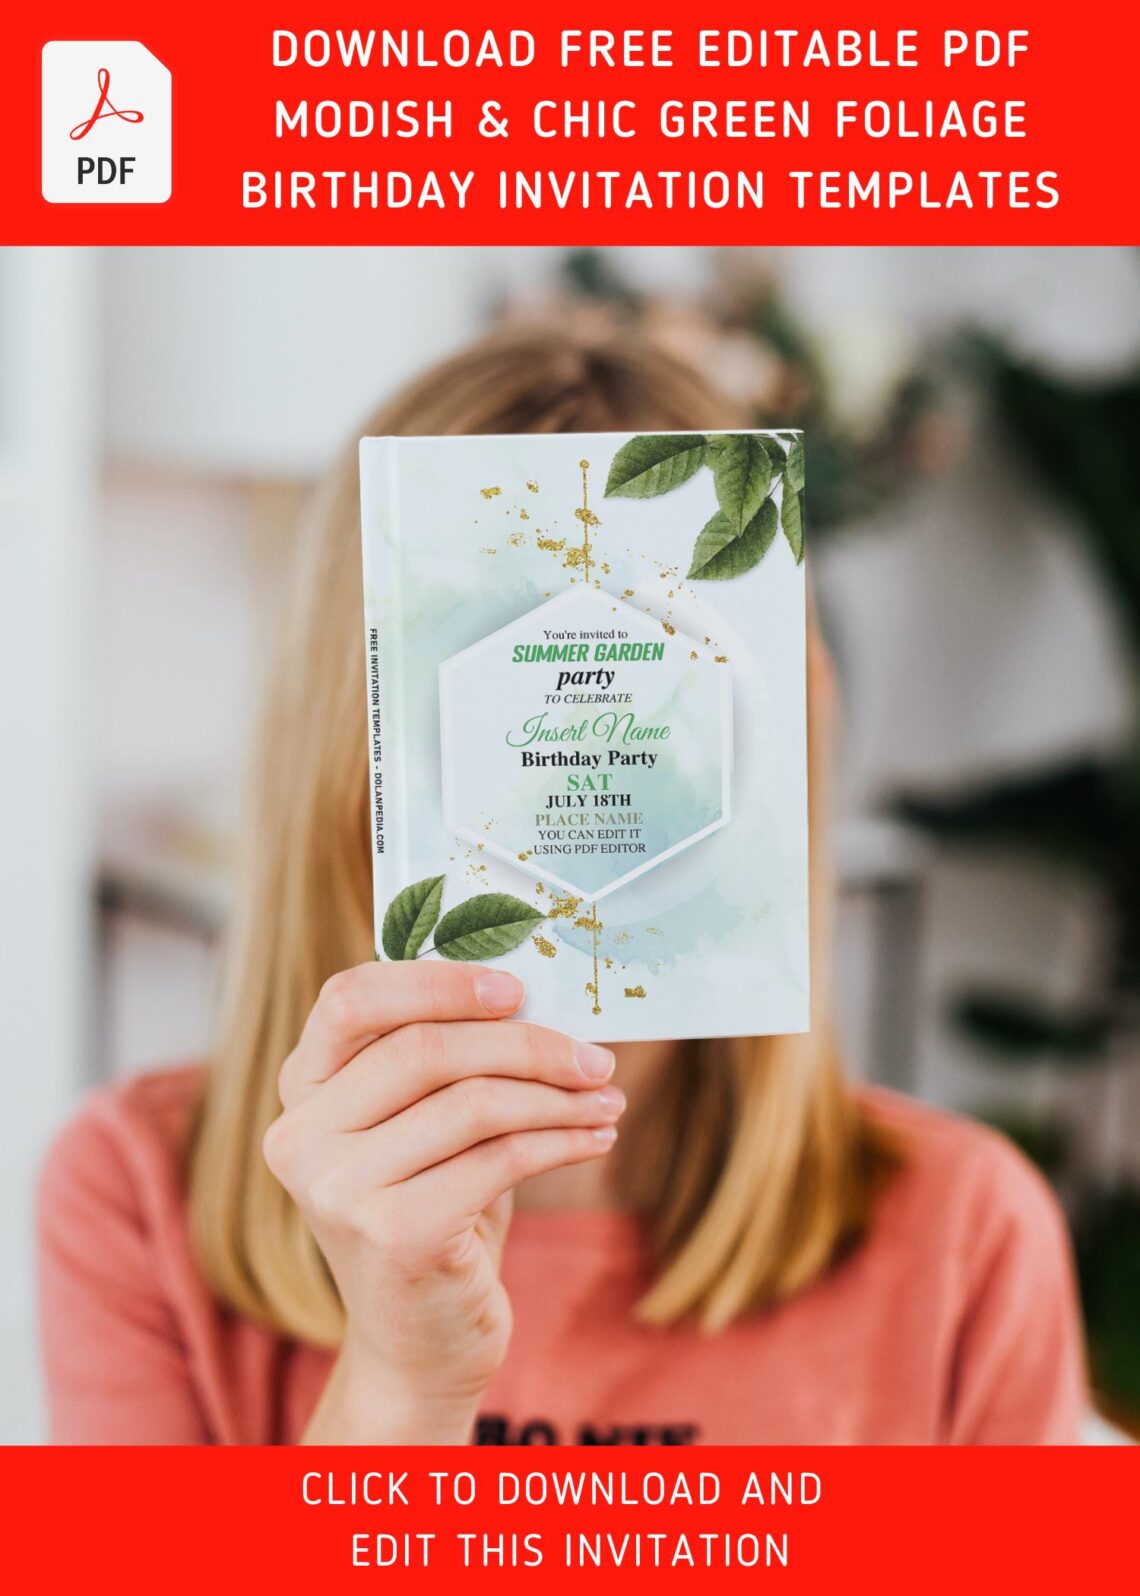 (Free Editable PDF) Modish And Chic Green Foliage Birthday Invitation Templates with green leaf